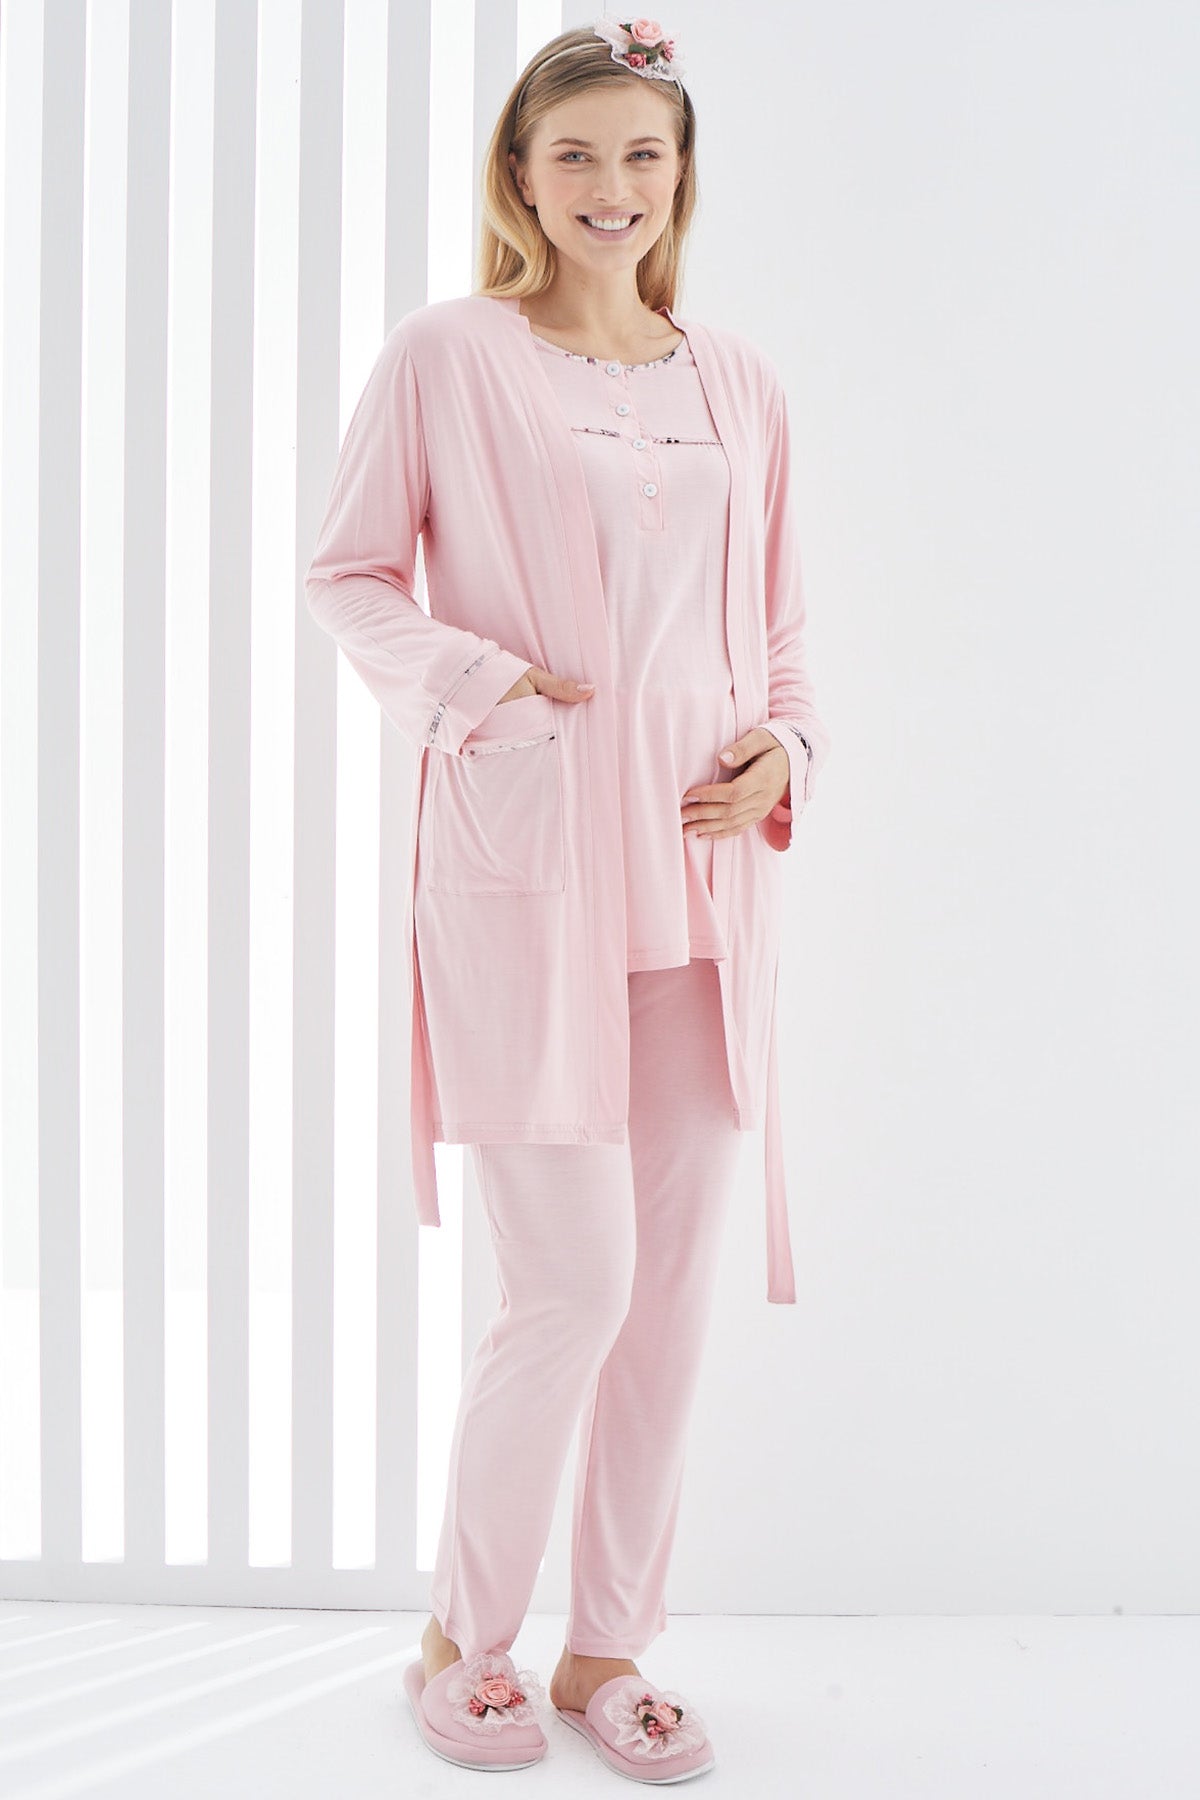 Shopymommy 3408 Stripe 3-Pieces Maternity & Nursing Pajamas With Robe Pink